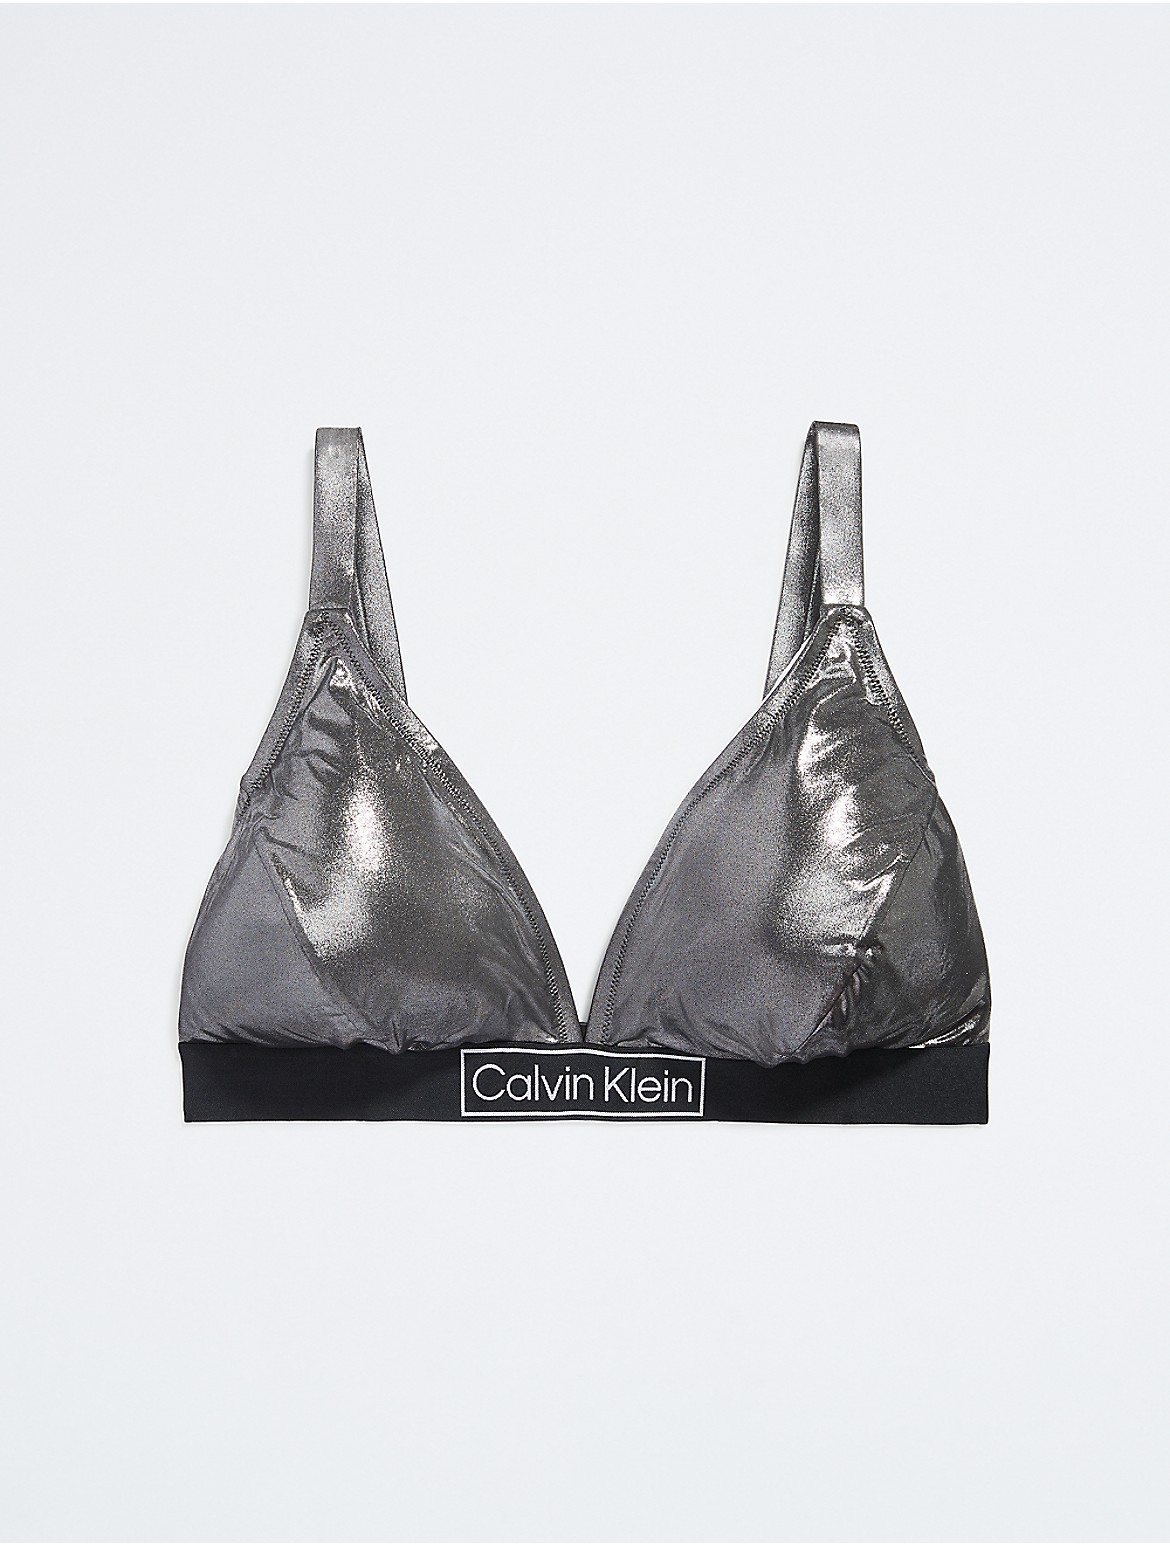 Calvin Klein Women's Core Festive Bikini Top - Black - 1X